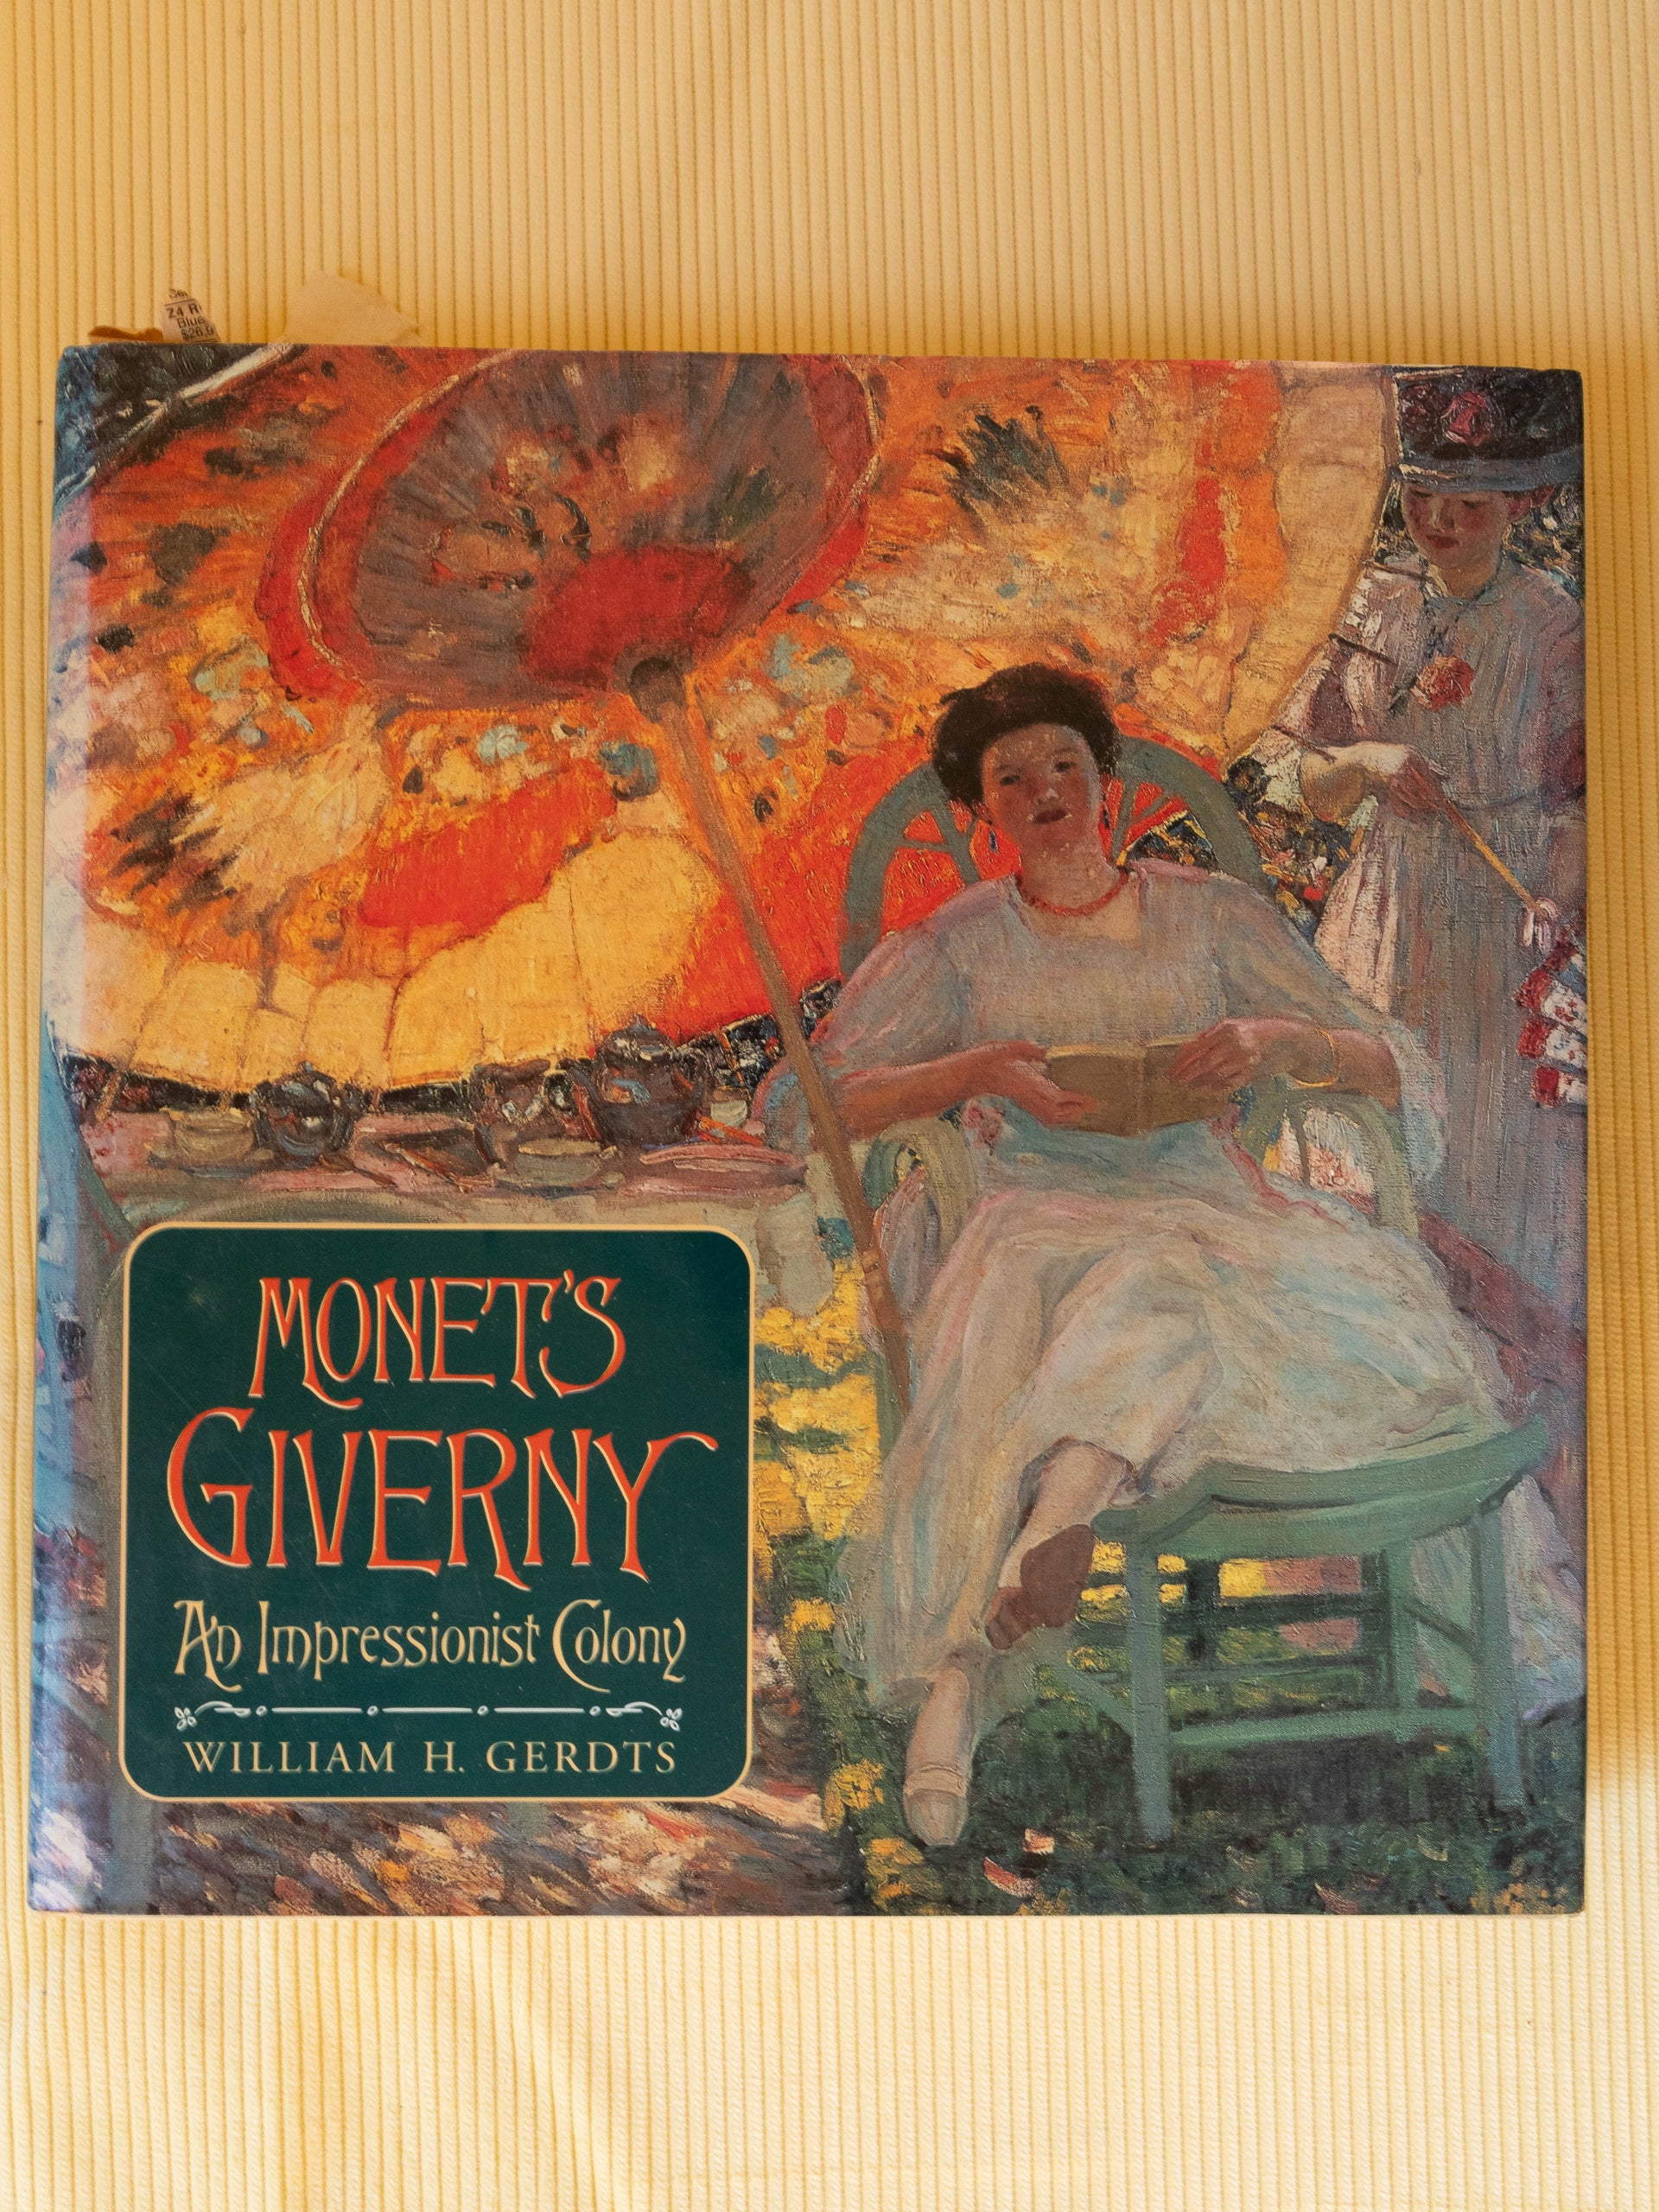 Monet's Giverny